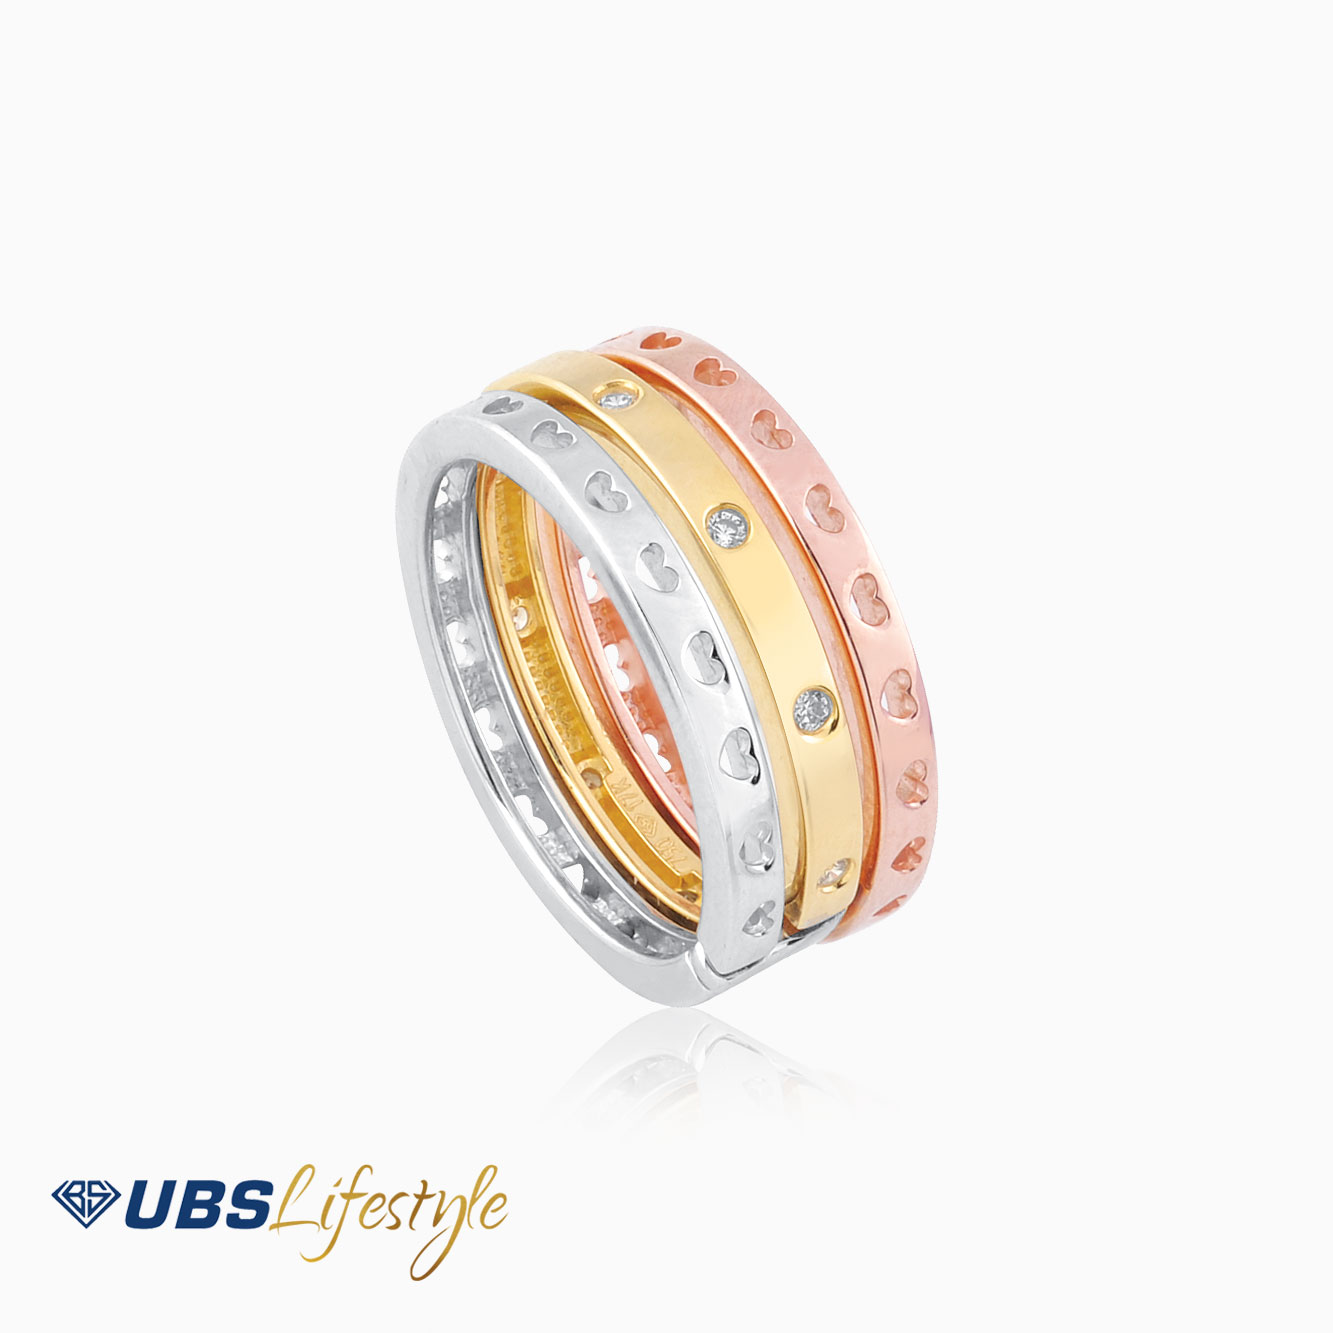 UBS Cincin Emas Foldyz - Cc15798 - 17K